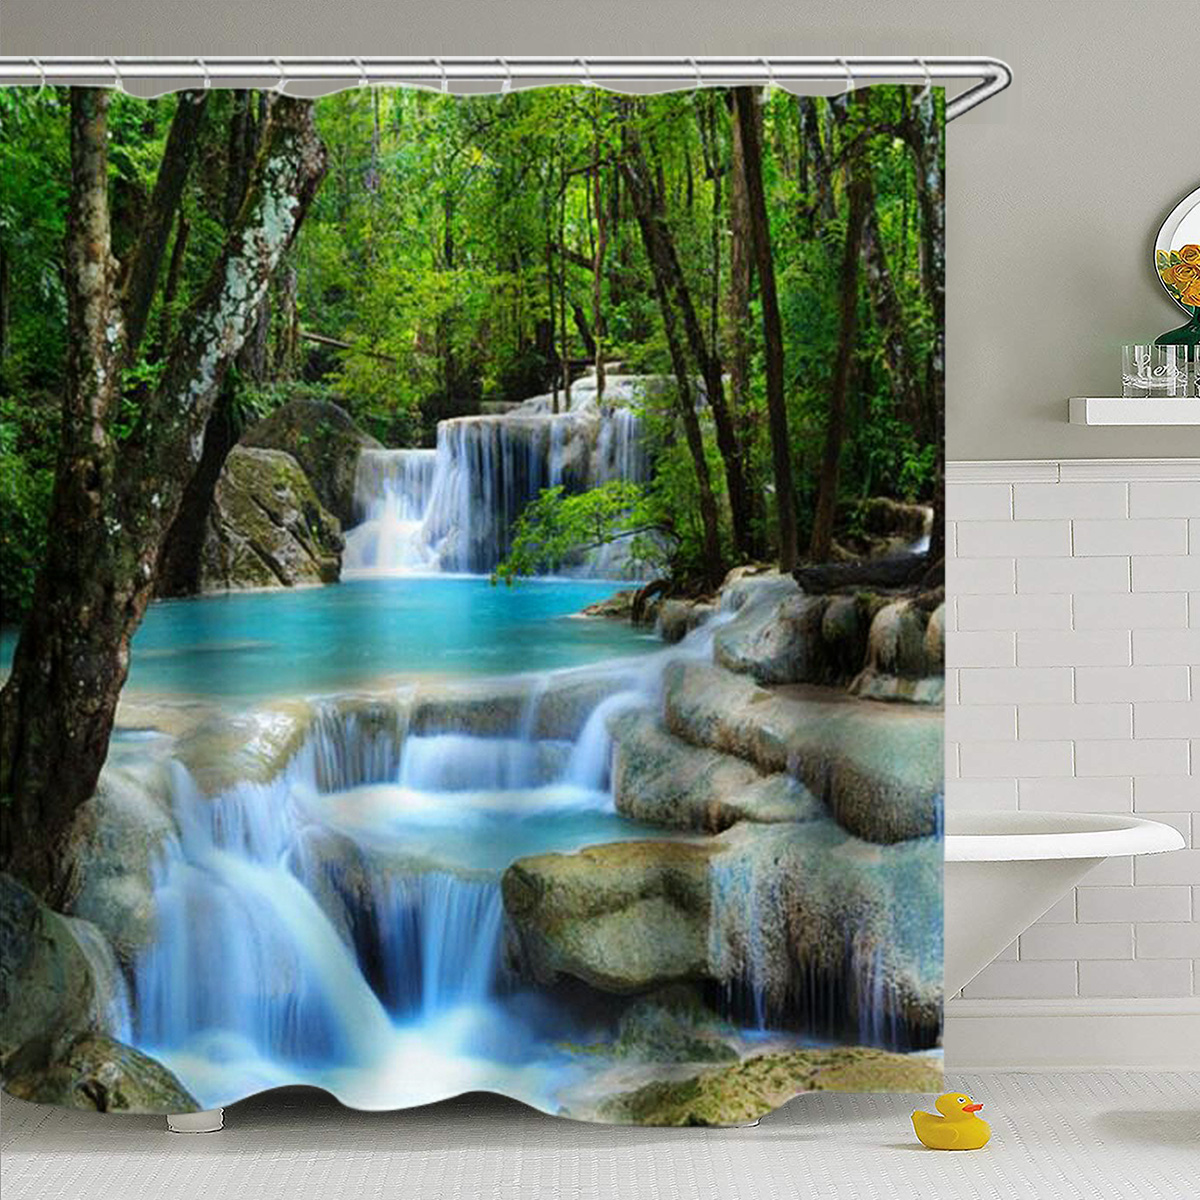 Waterproof Fabric Shower Curtain Hook Autumn Mountain Sunset Scenic Bathroom Set